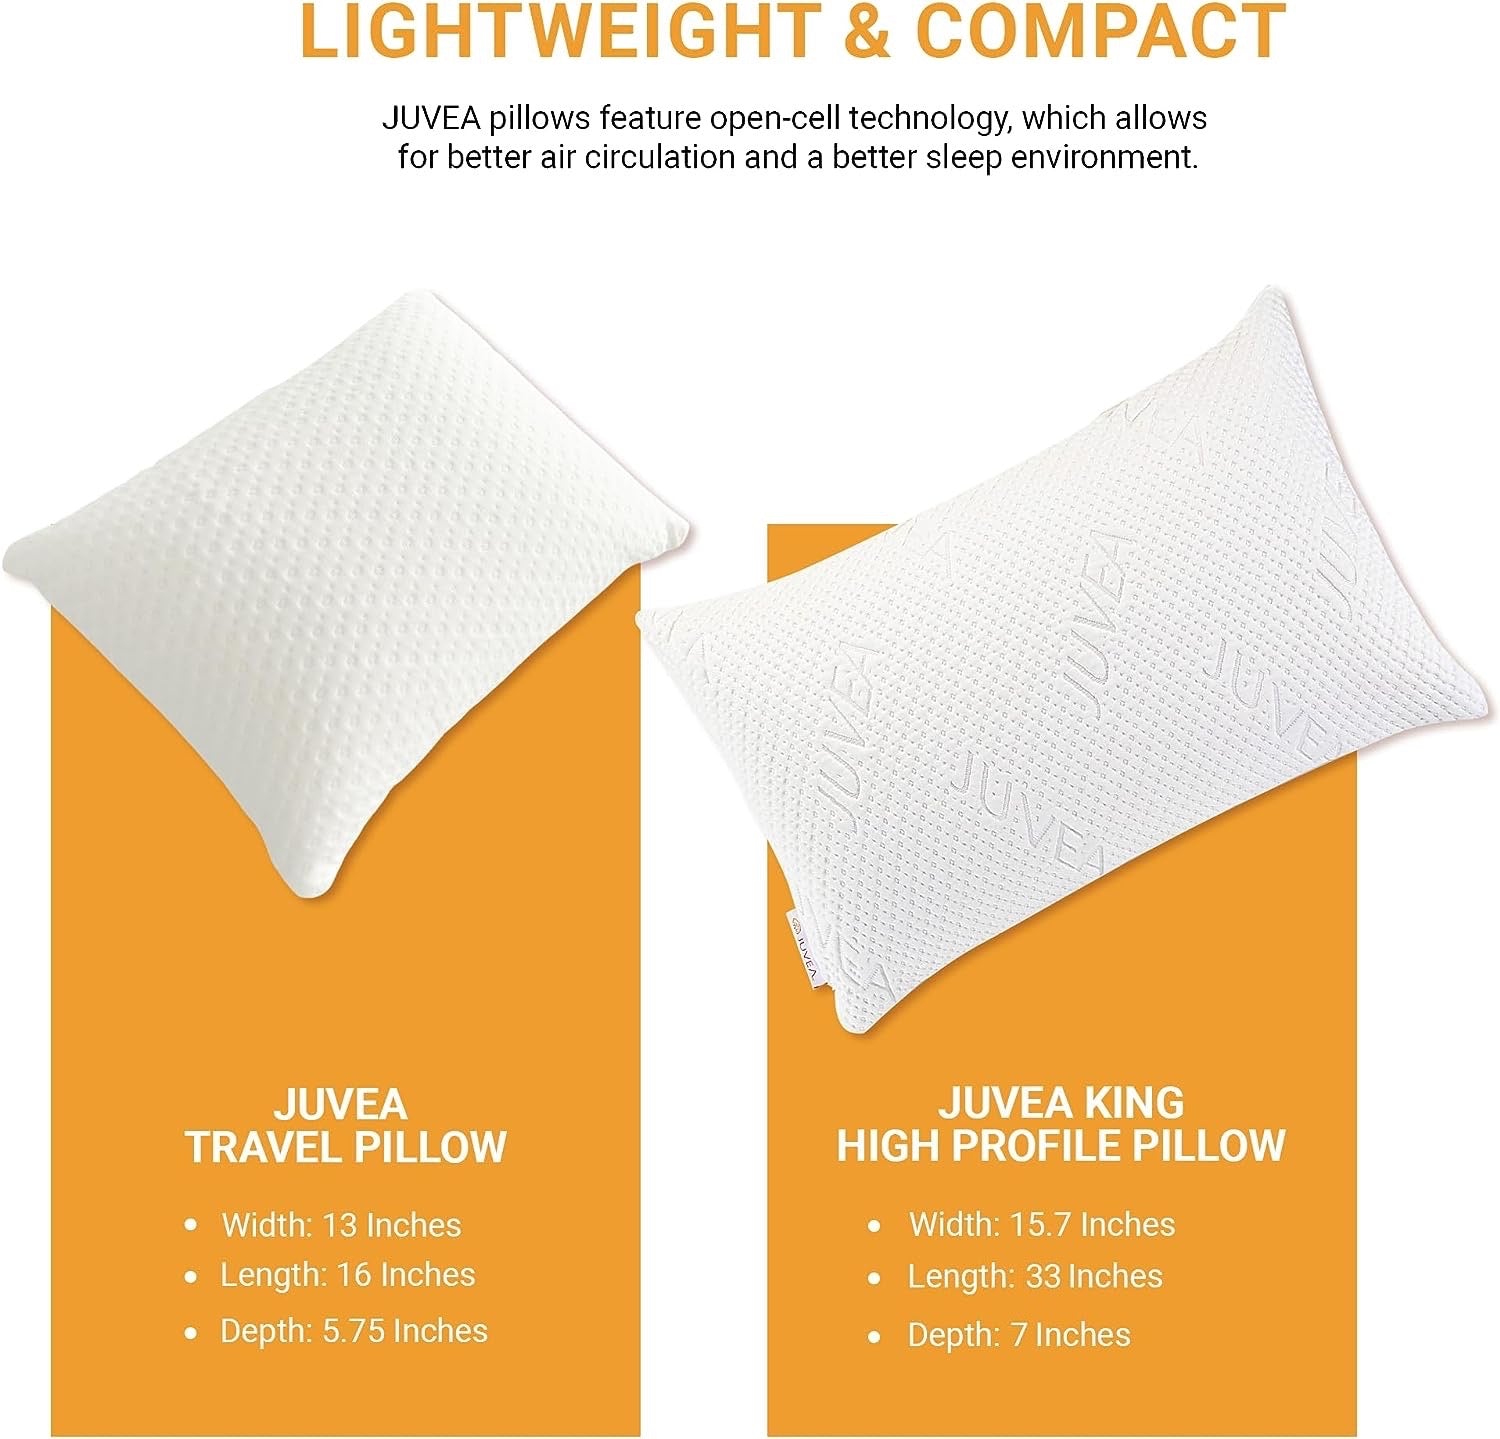 Juvea Travel Pillow Dimensions vs Juvea High Profile King Size Pillow Dimensions